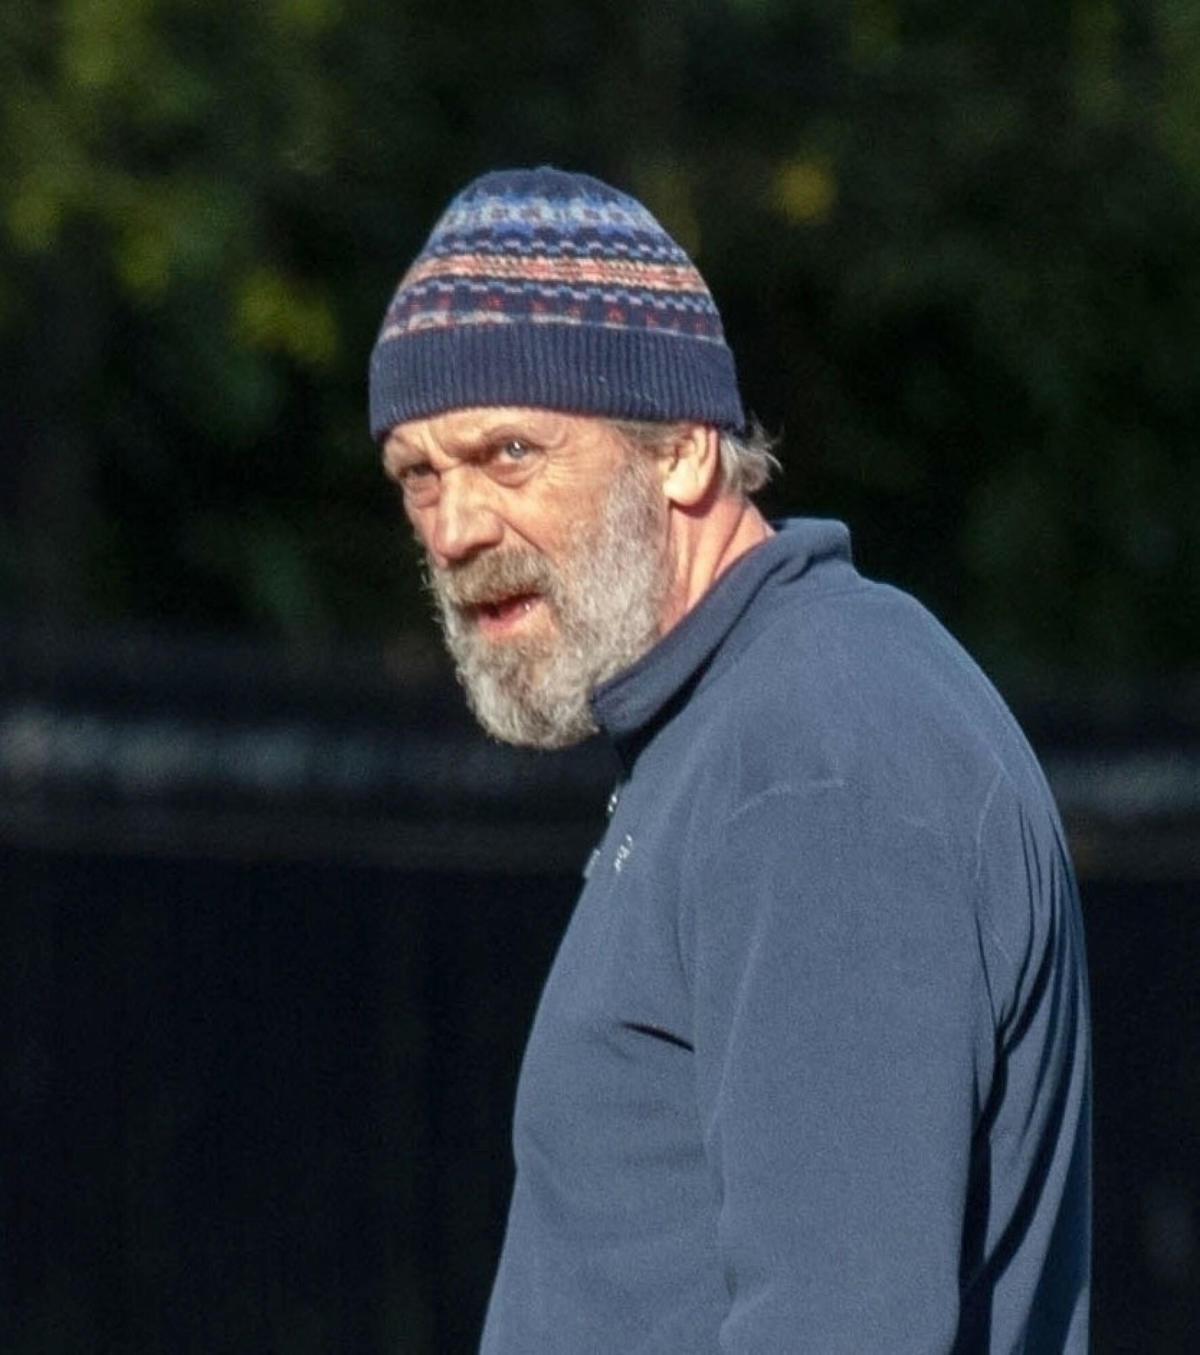 Hugh Laurie is 63 years old